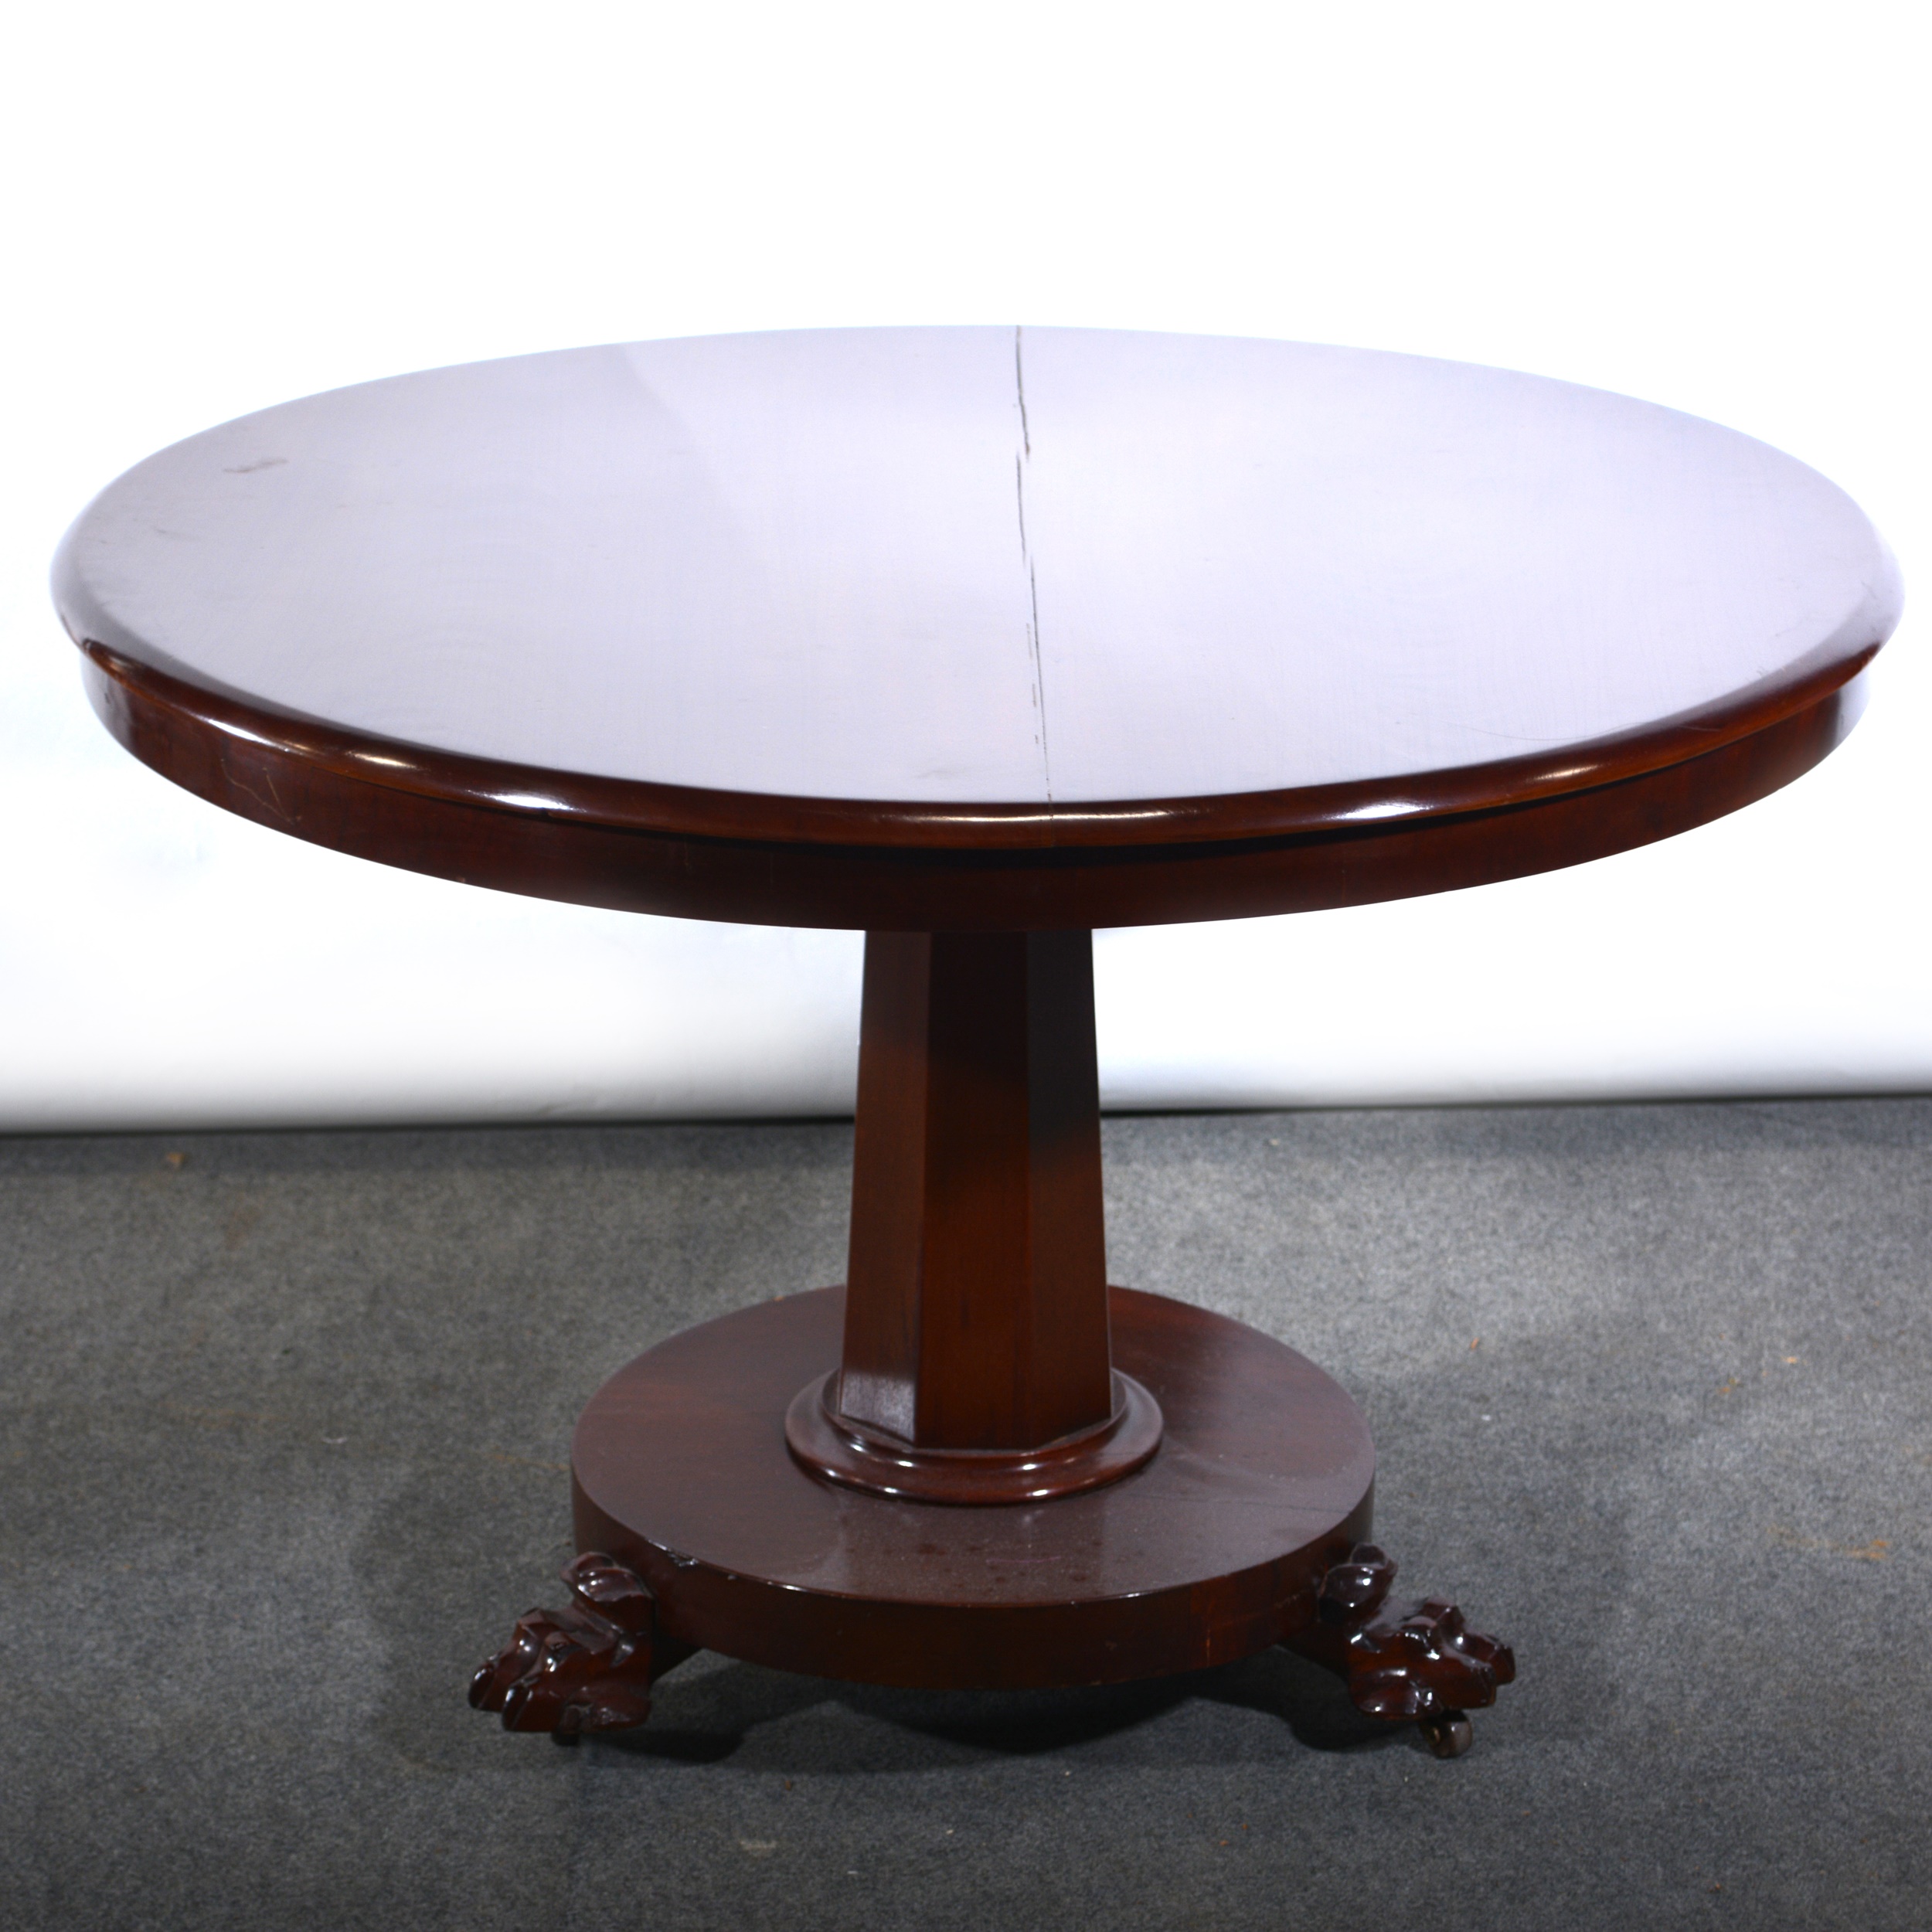 A refinished mahogany breakfast table, circular tilt top, octagonal taperin